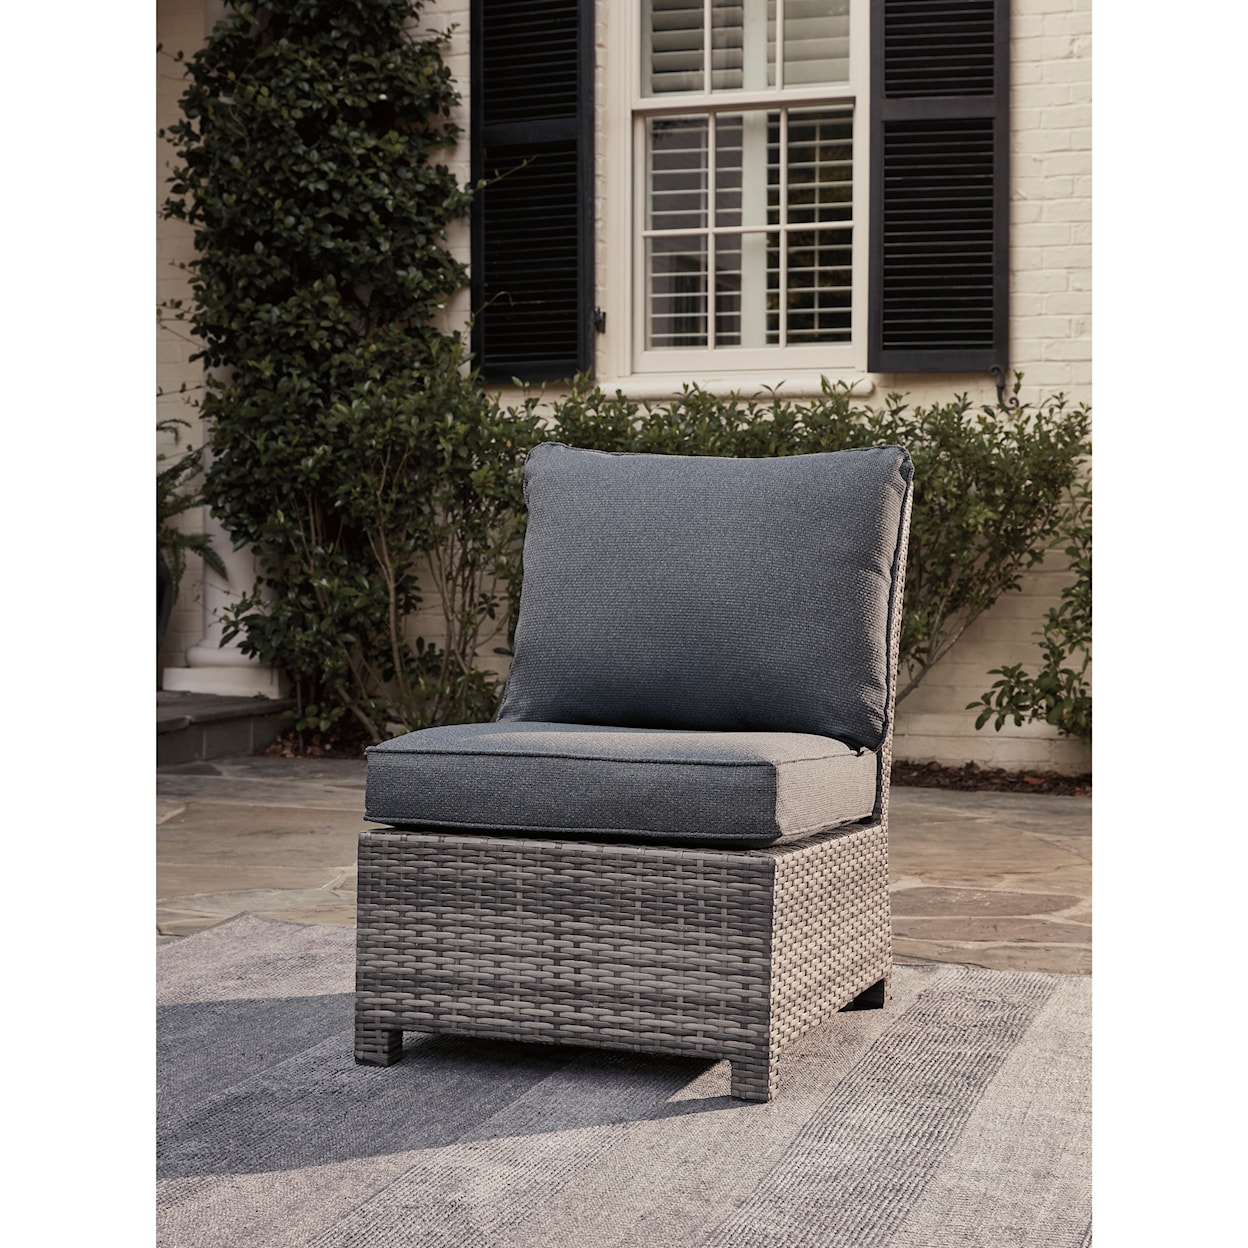 Ashley Furniture Signature Design Salem Beach Armless Chair with Cushion